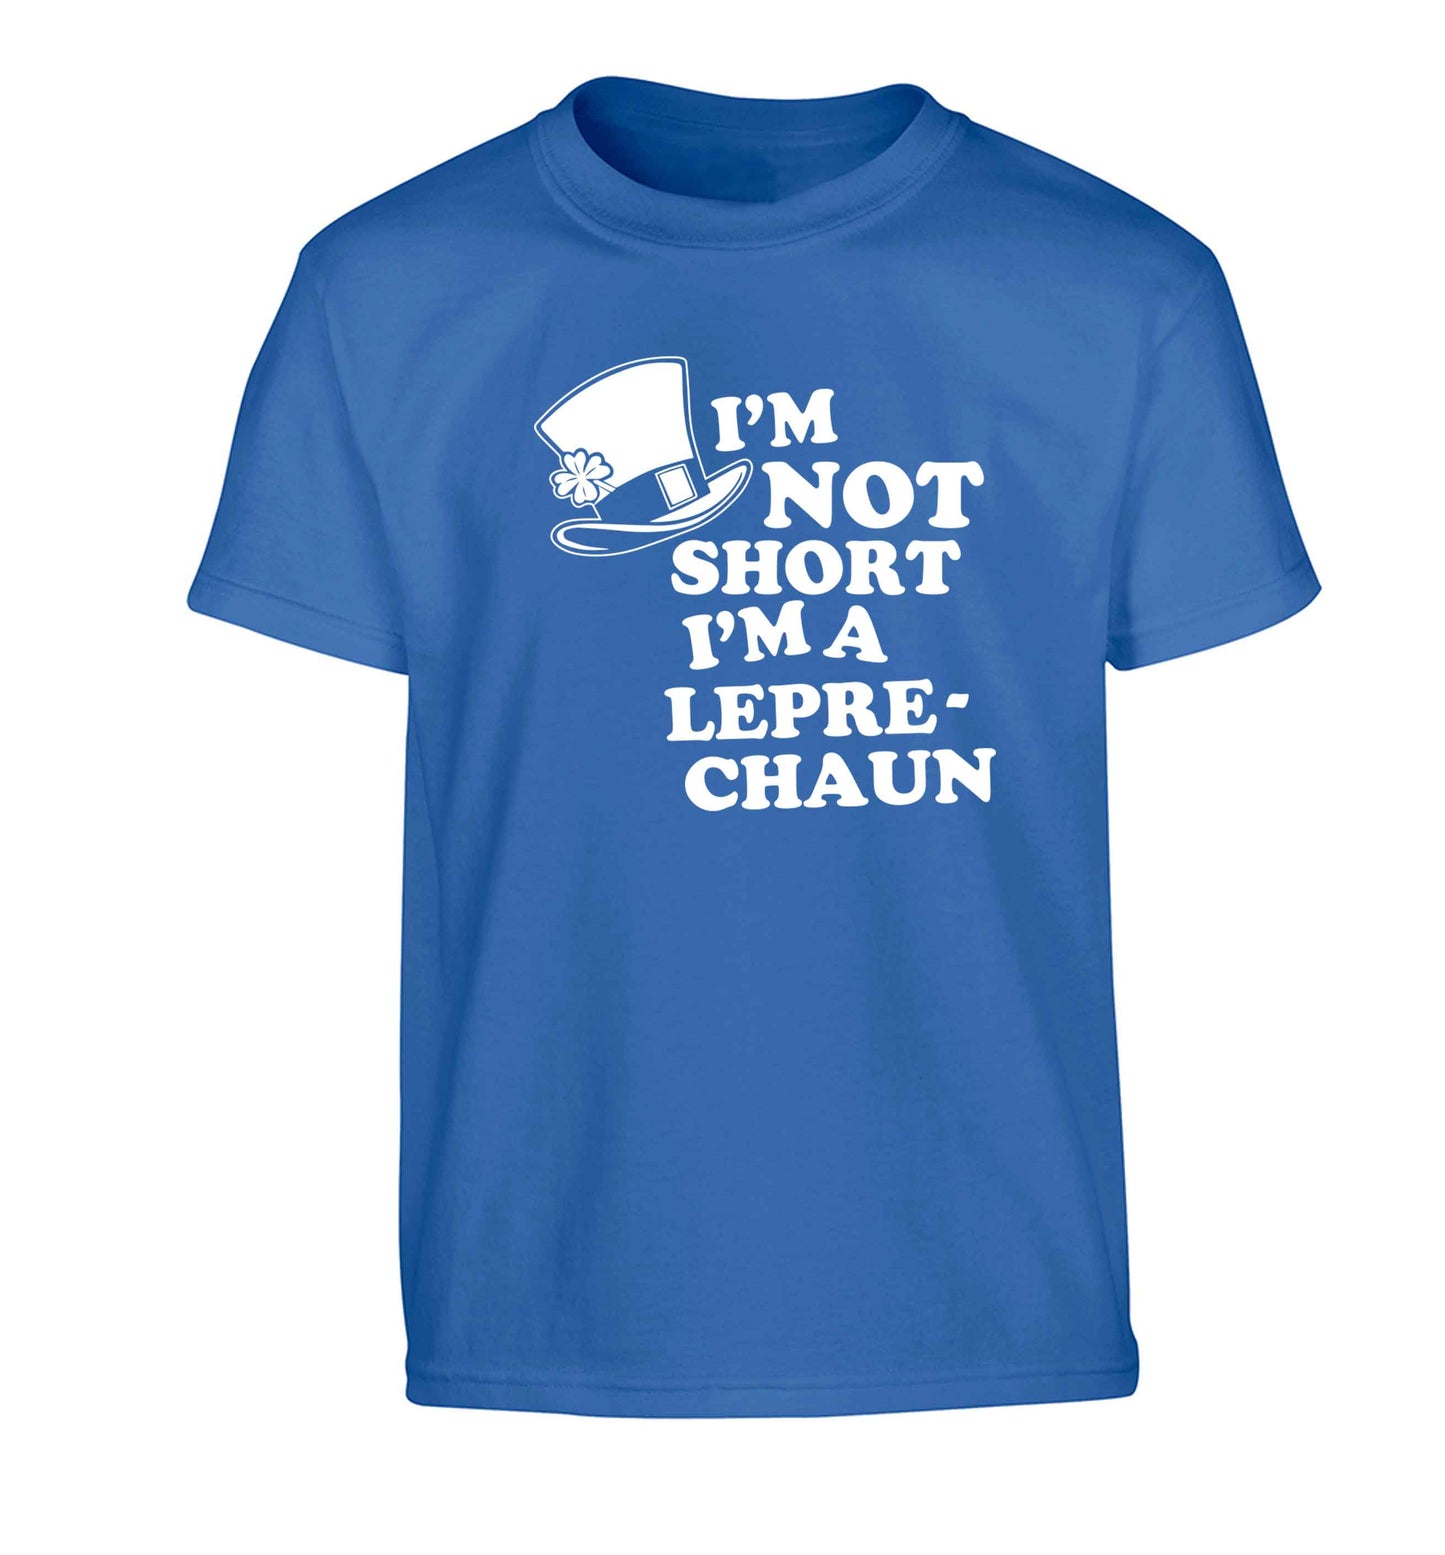 I'm not short I'm a leprechaun Children's blue Tshirt 12-13 Years